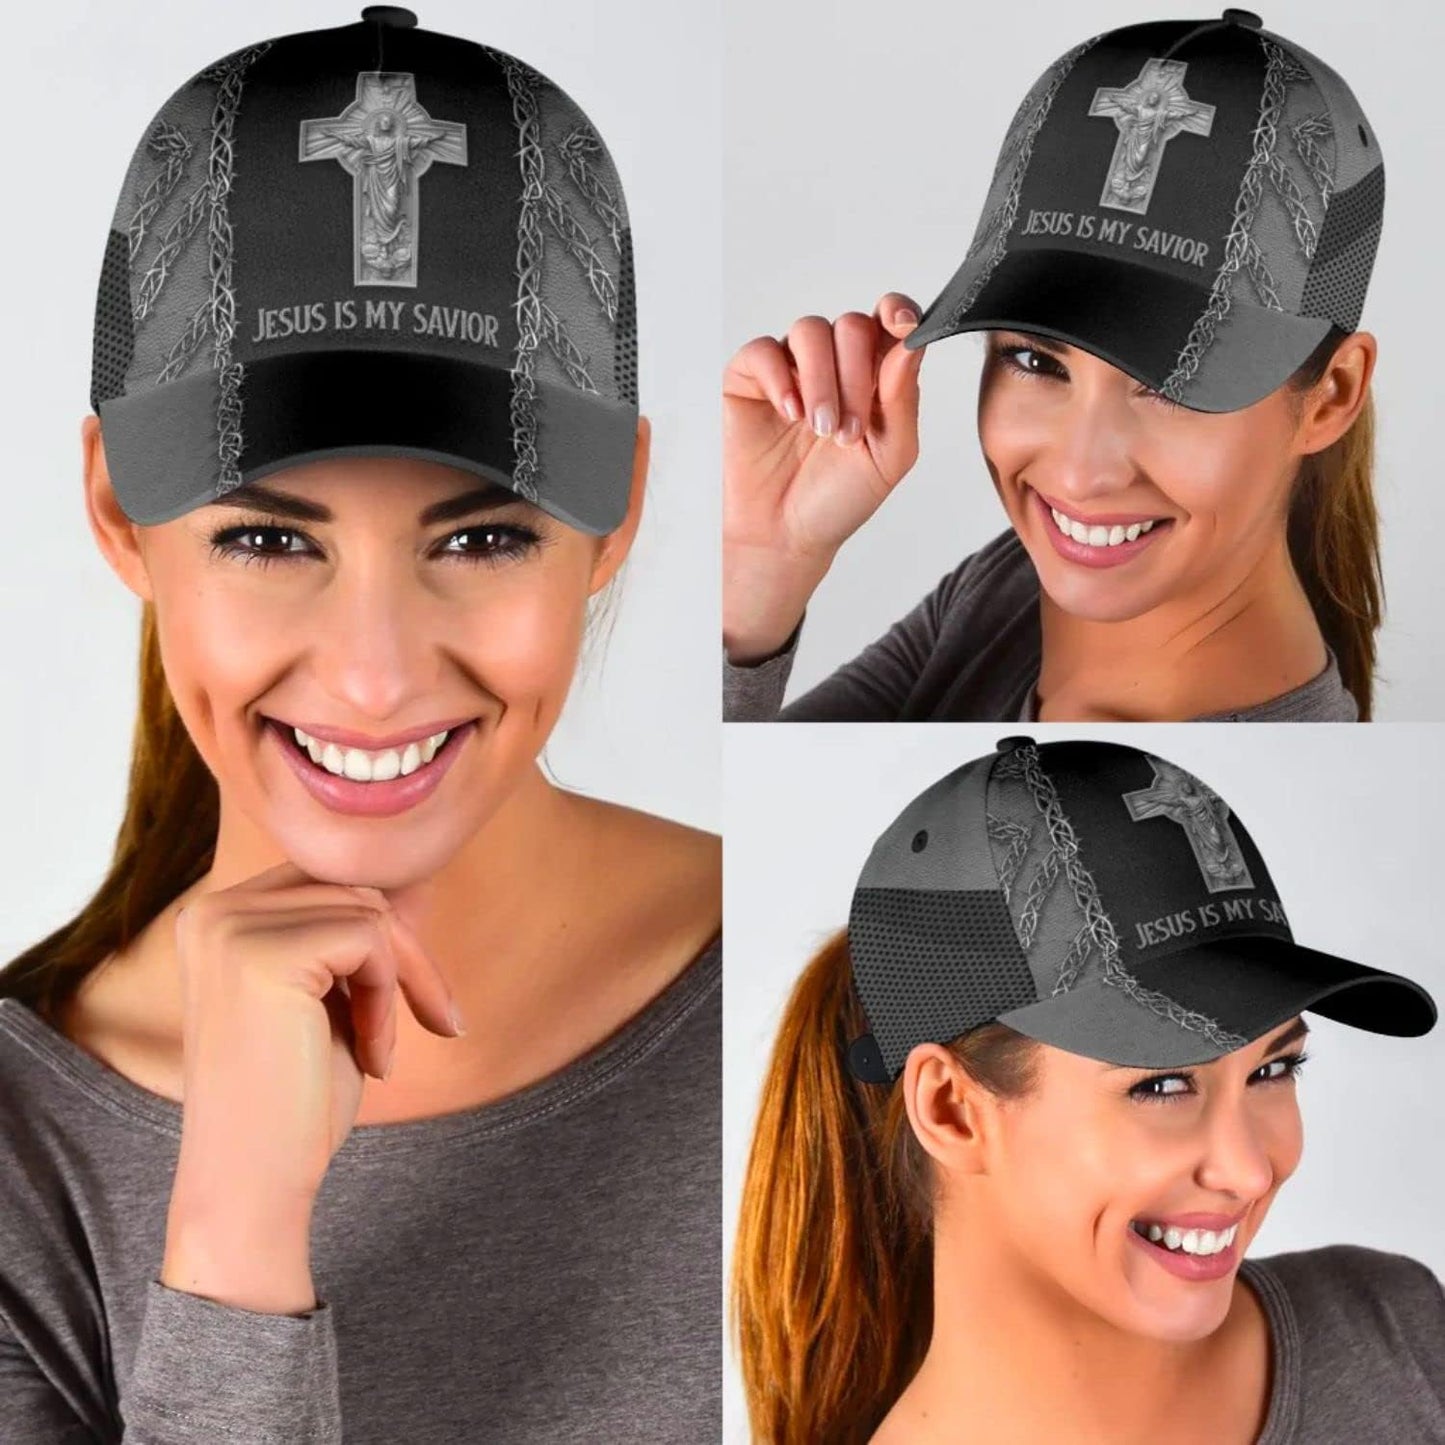 Jesus Is My Savior Cross Baseball Cap - Christian Hats for Men and Women